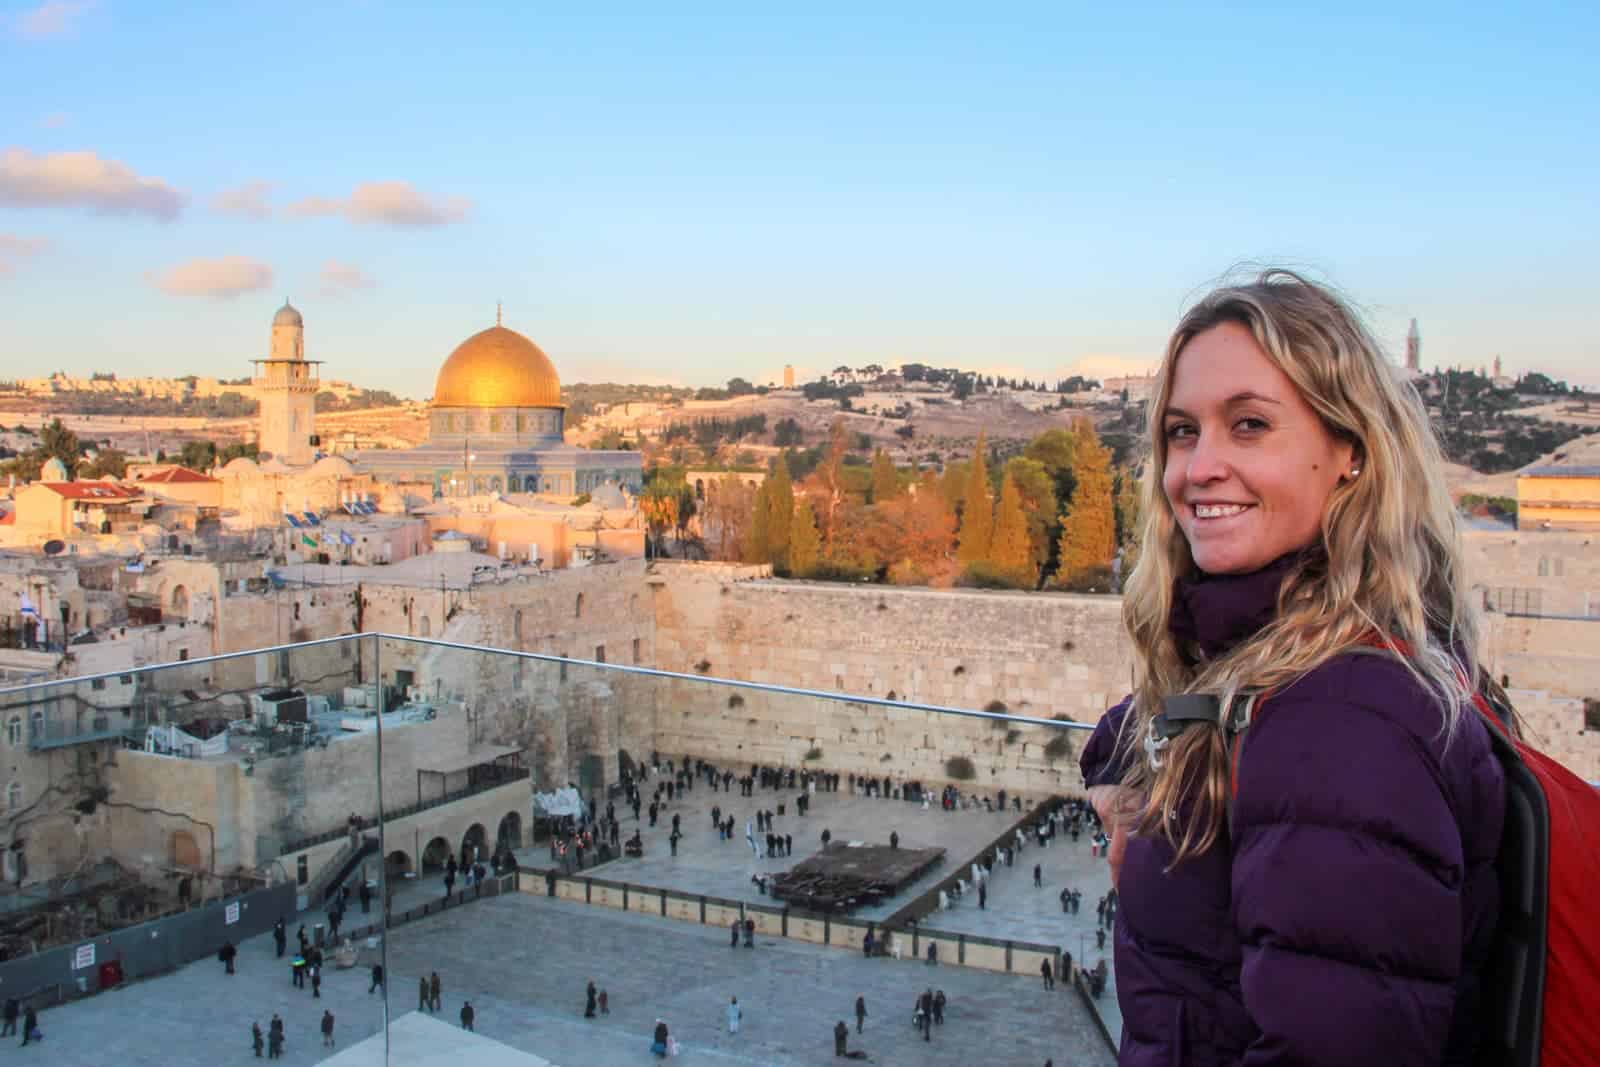 Visiting The Old City of Jerusalem